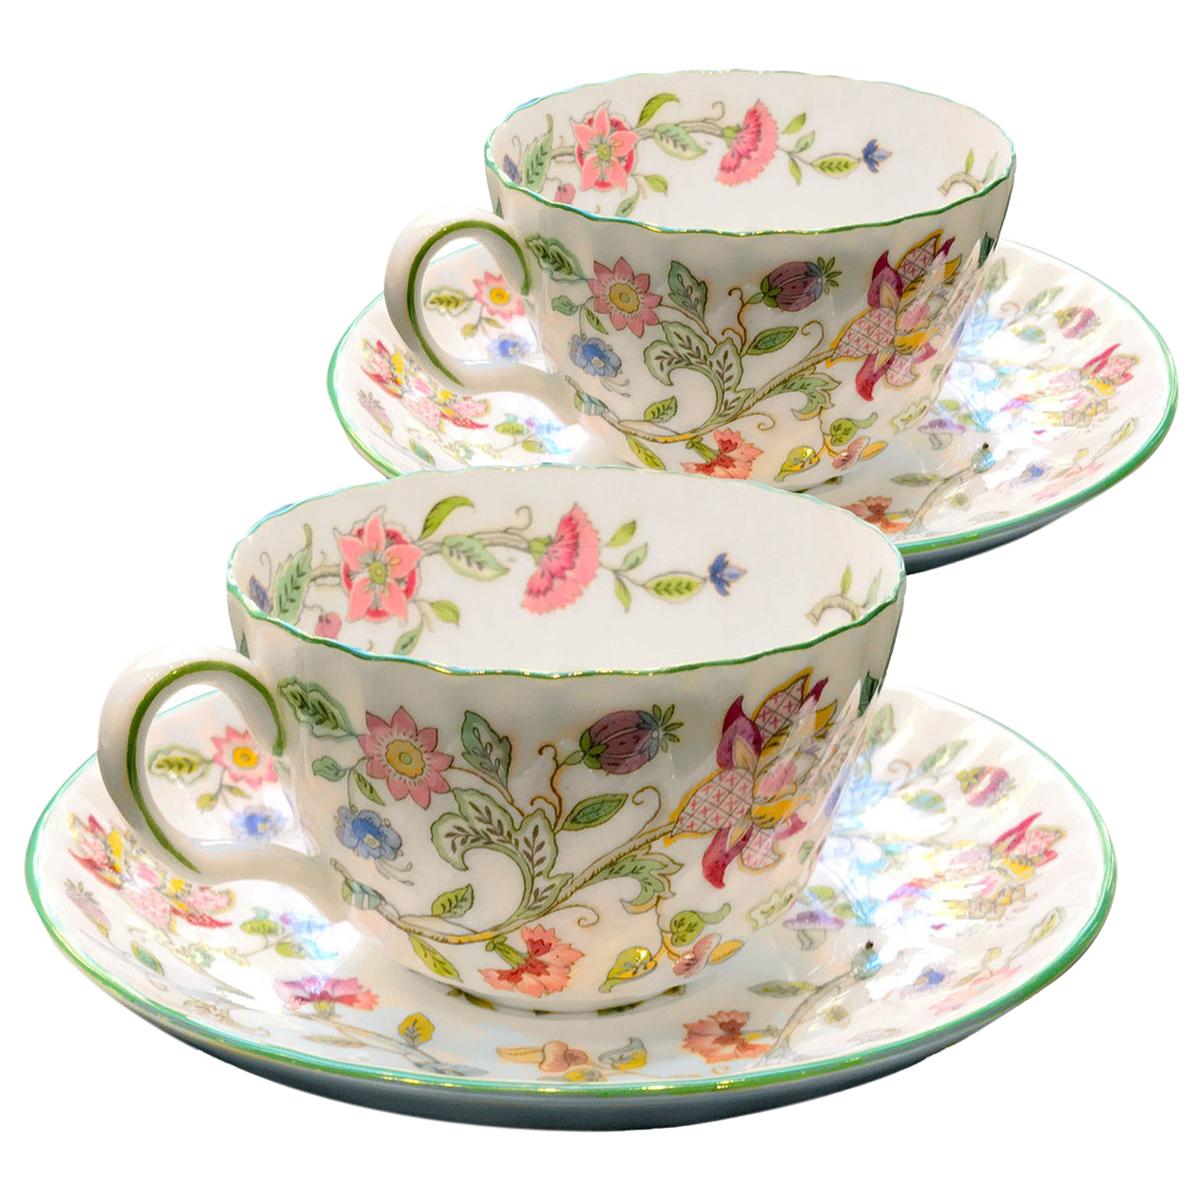 12 Teacups and Saucers Minton Bone China Porcelain Haddon Hall For Sale